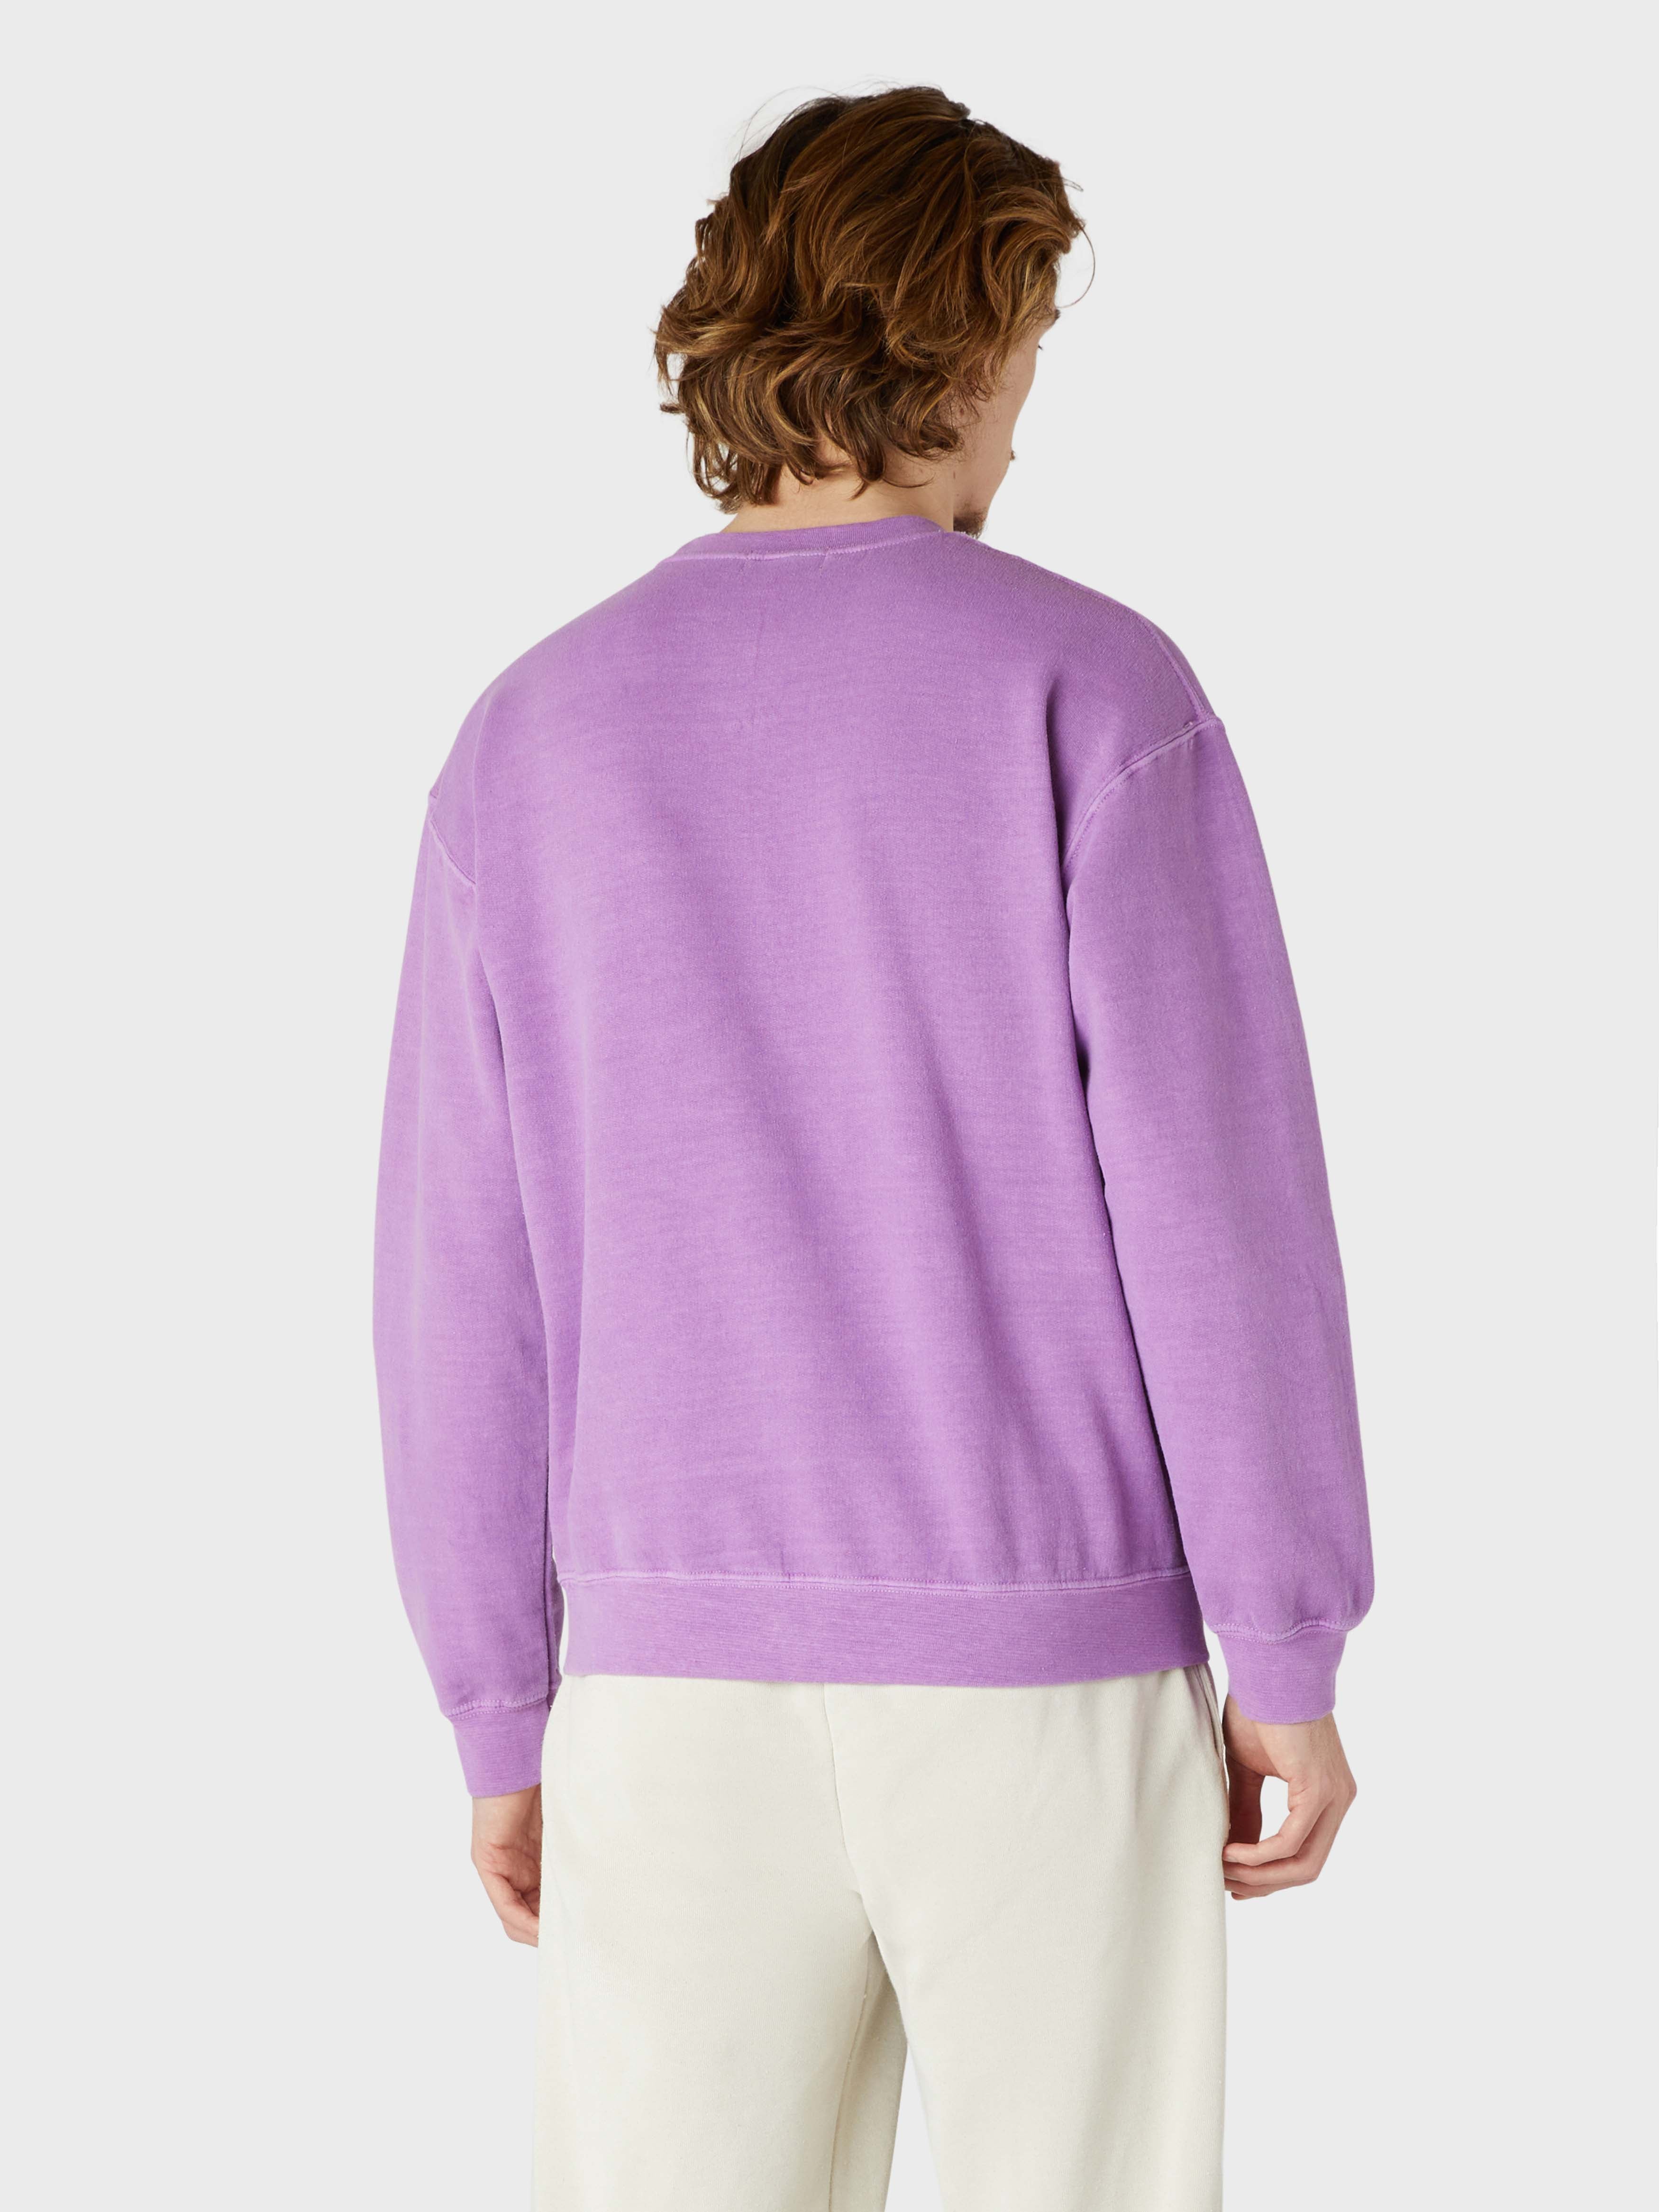 Speedway Classic Sweatshirt - Vintage Violet